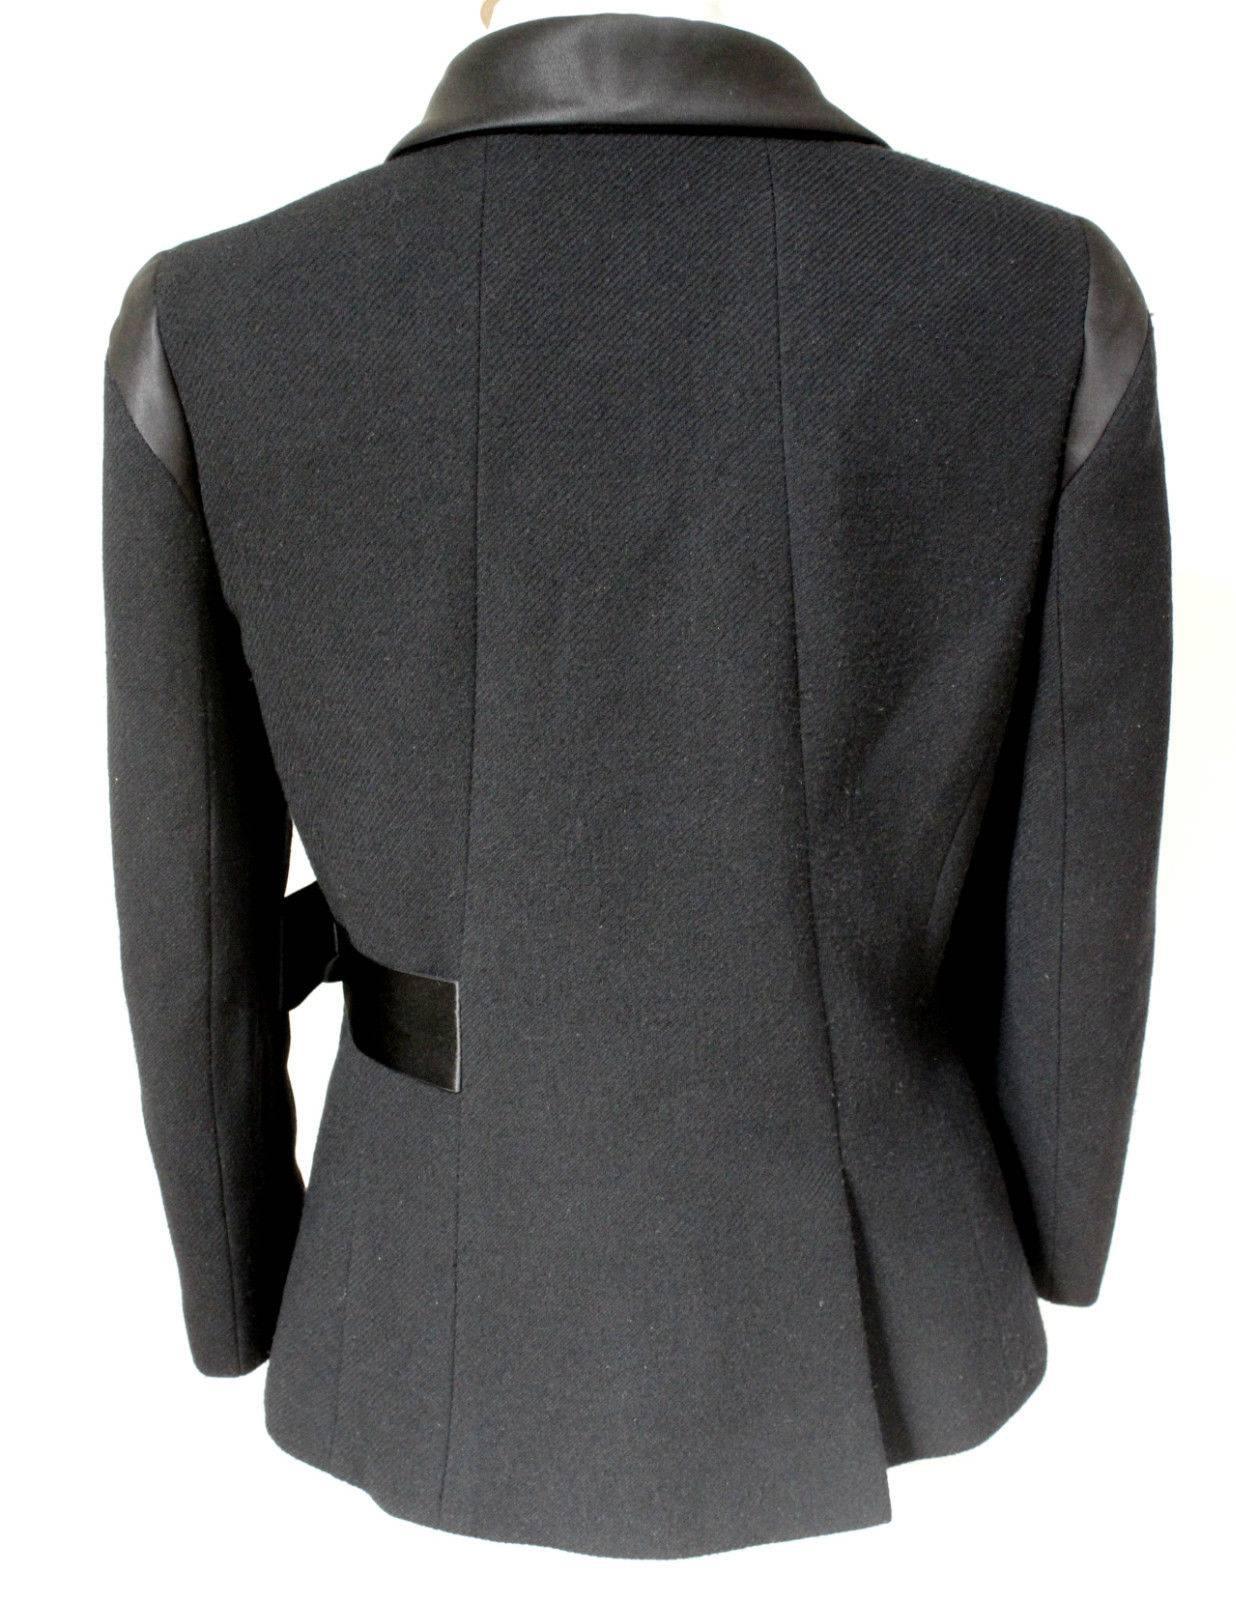 Black Chanel classic black wool satin bow jacket 42 uk 14